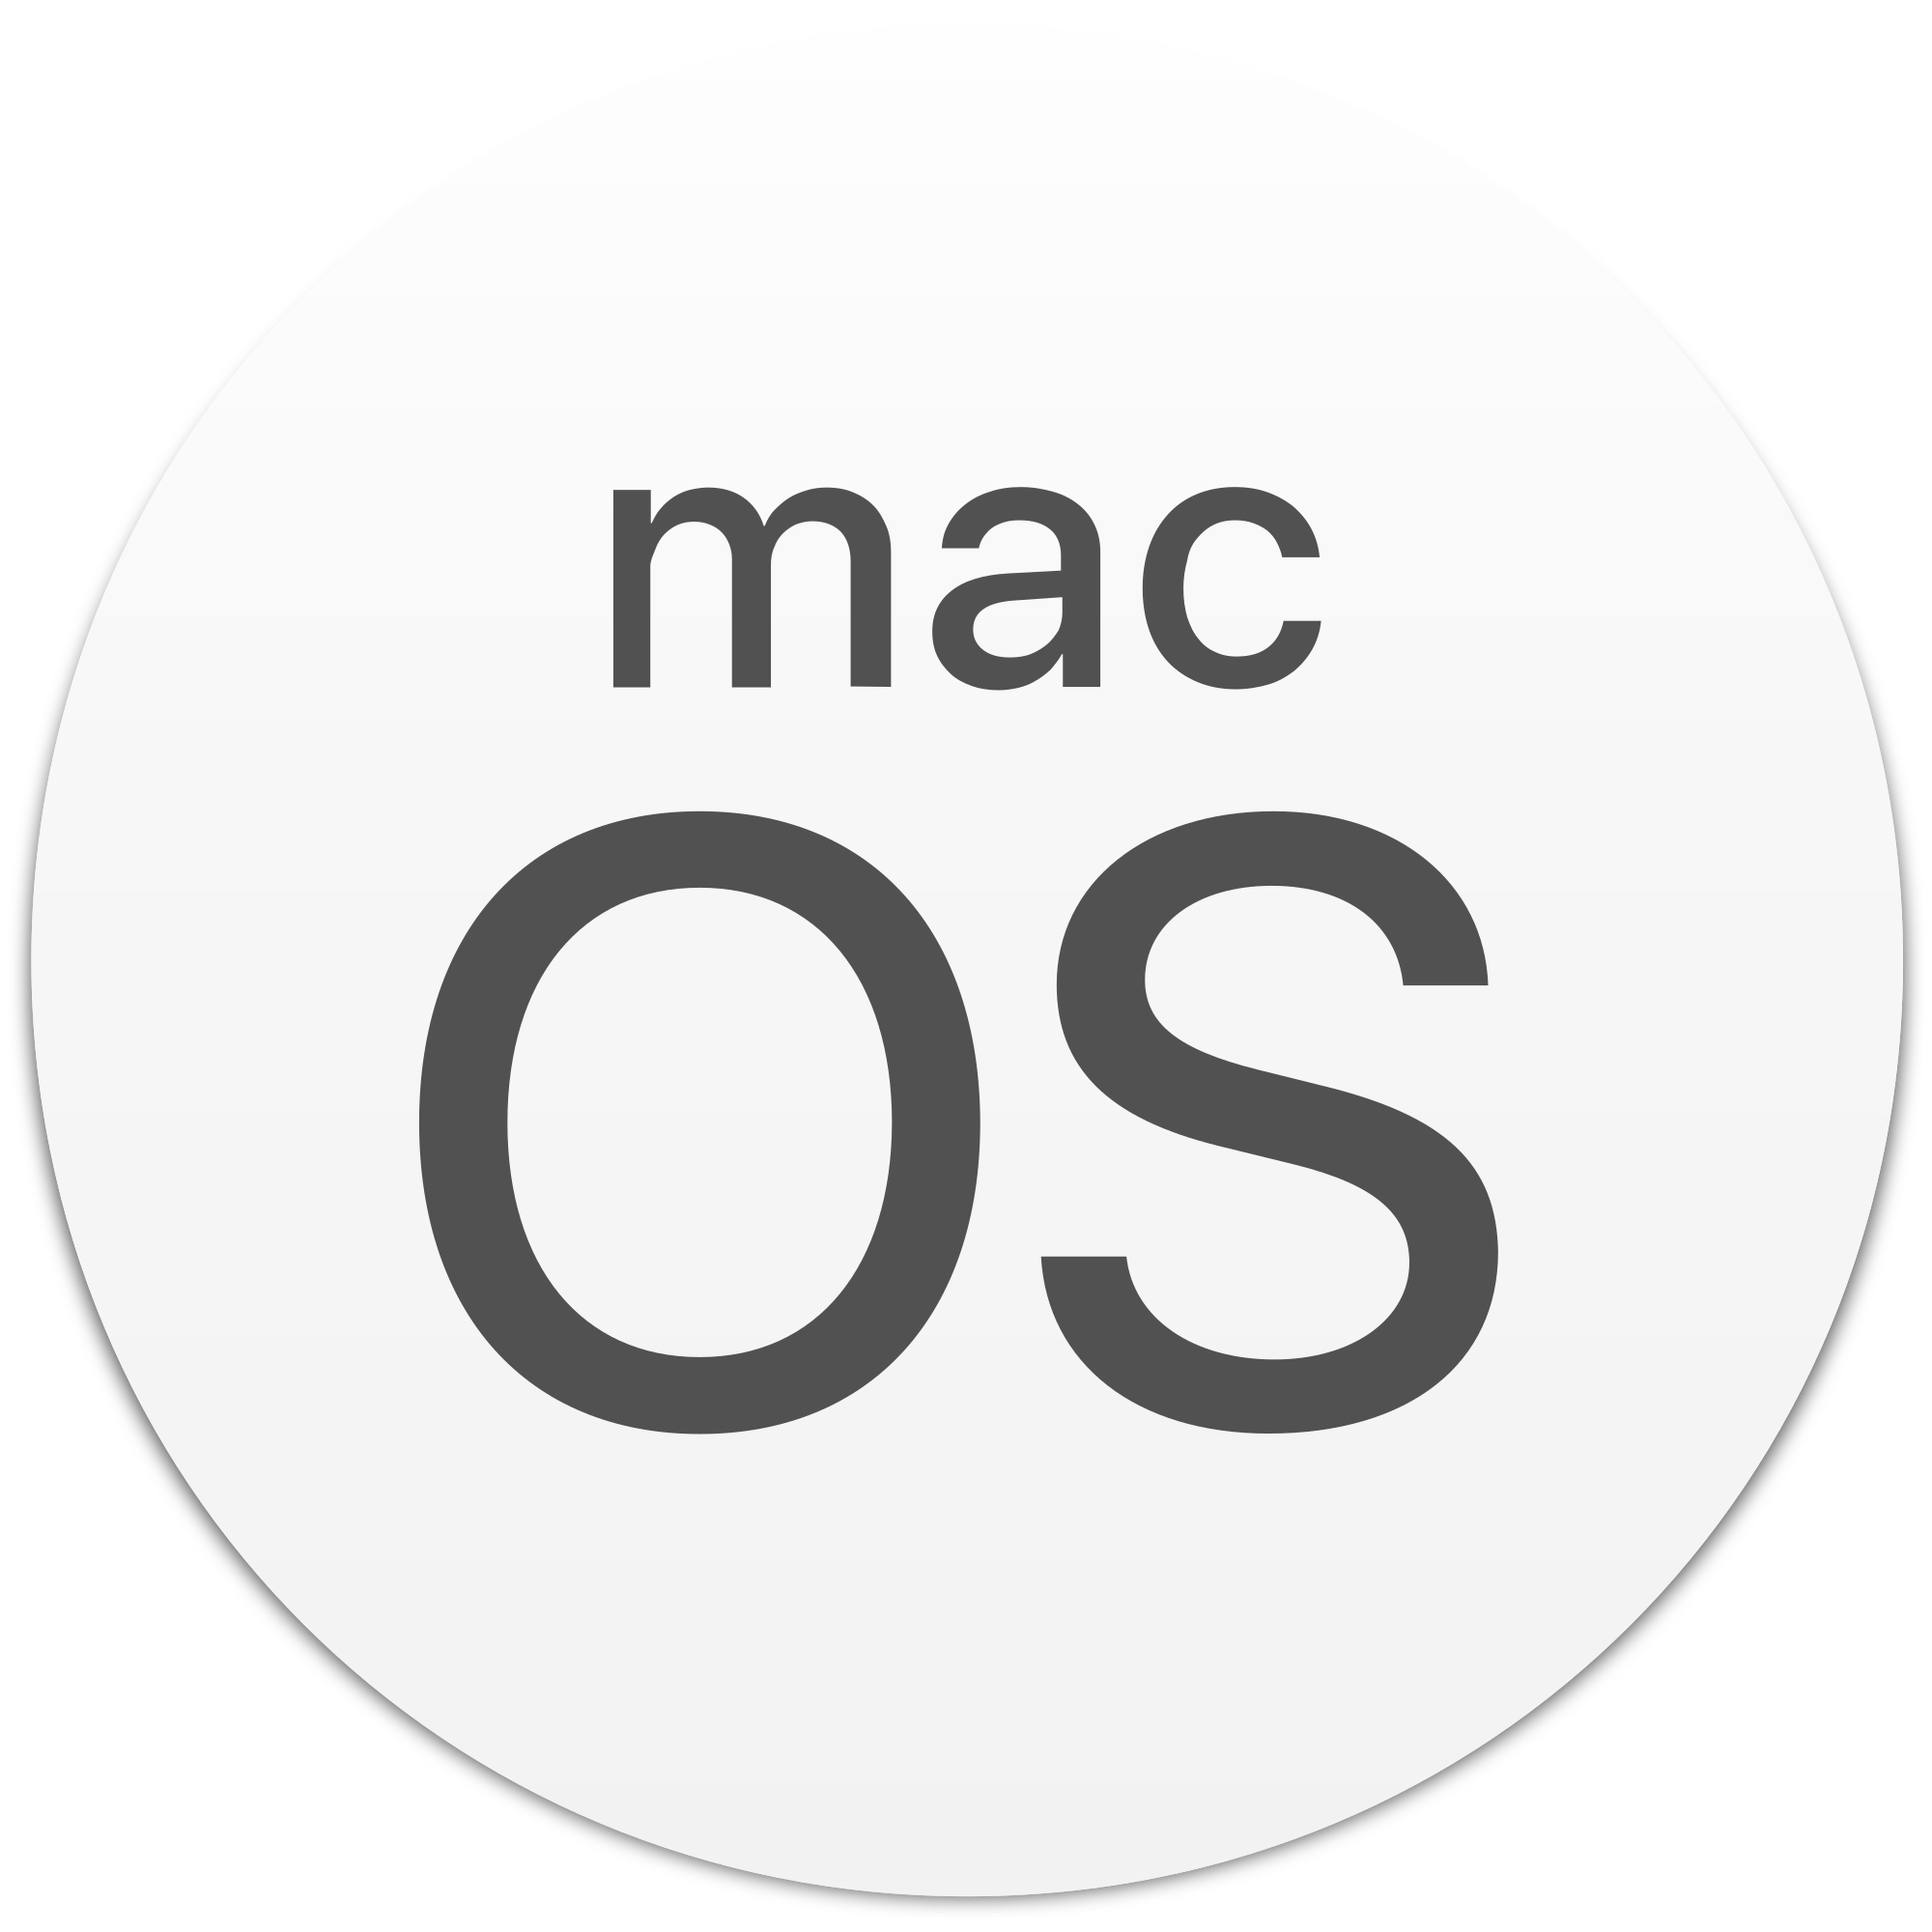 File:macOS logo.png.